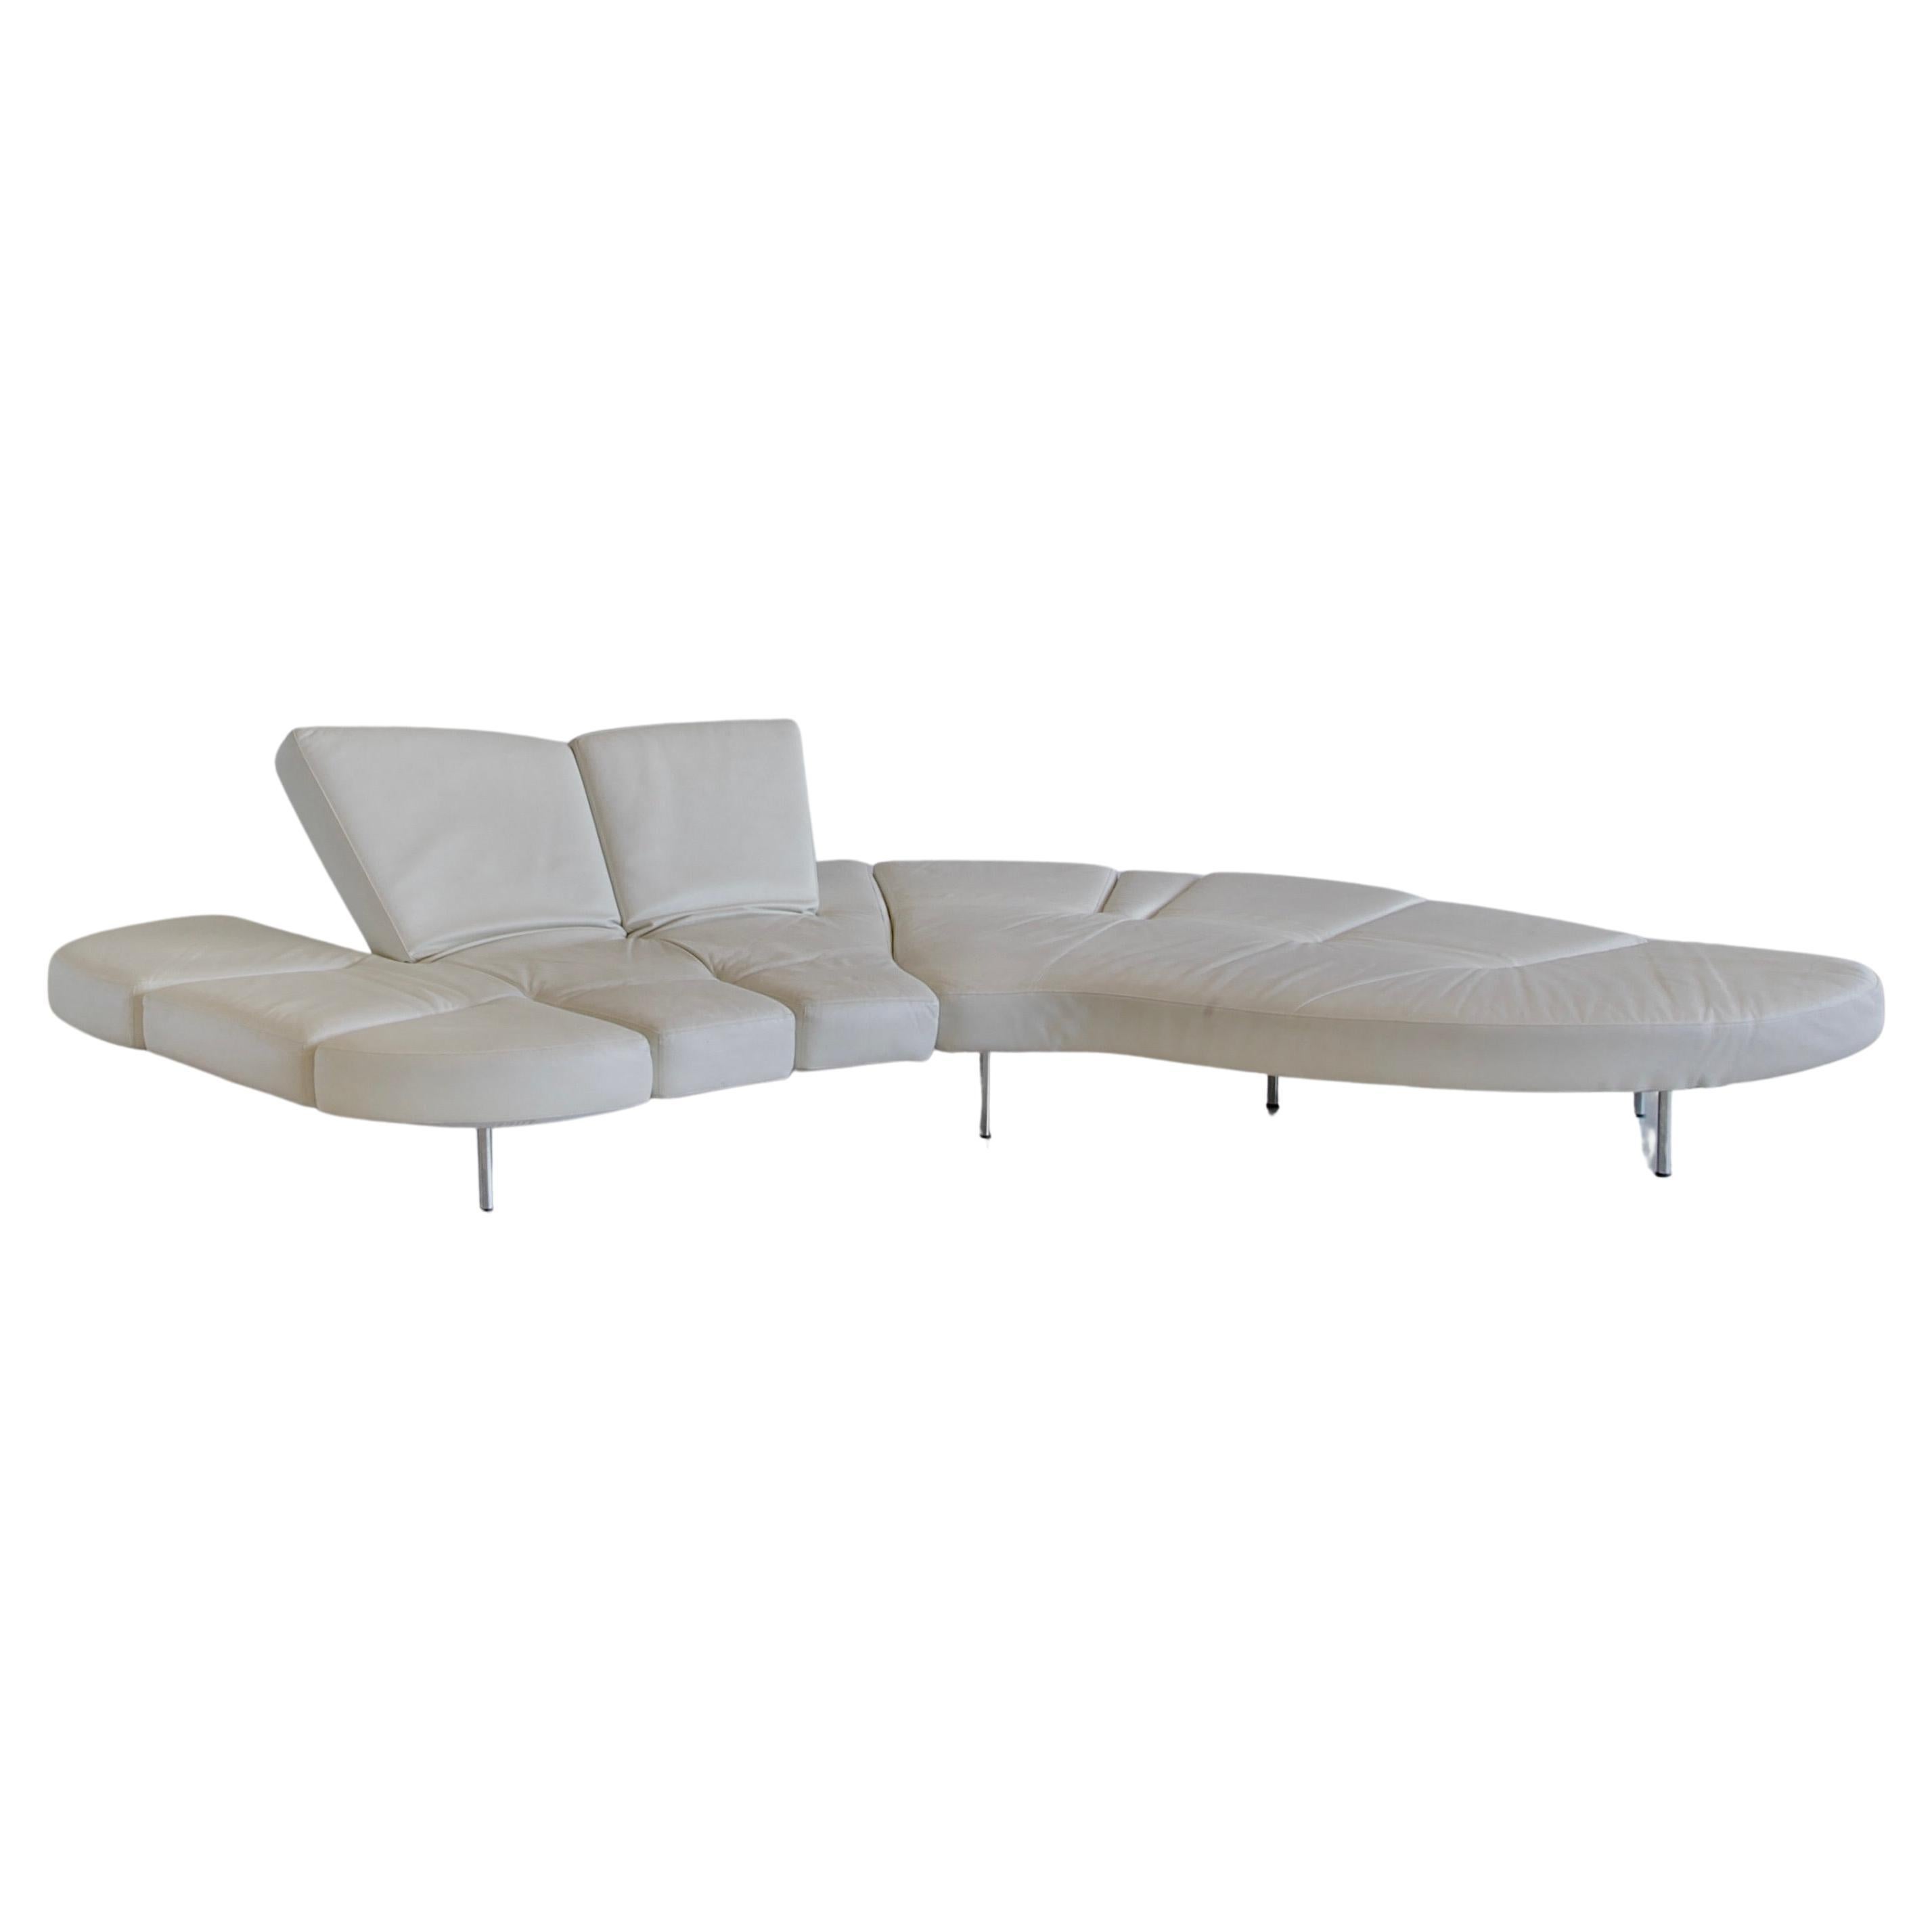 Cream Coloured "FLAP" Sofa Designed by Francesco BINFARE for EDRA